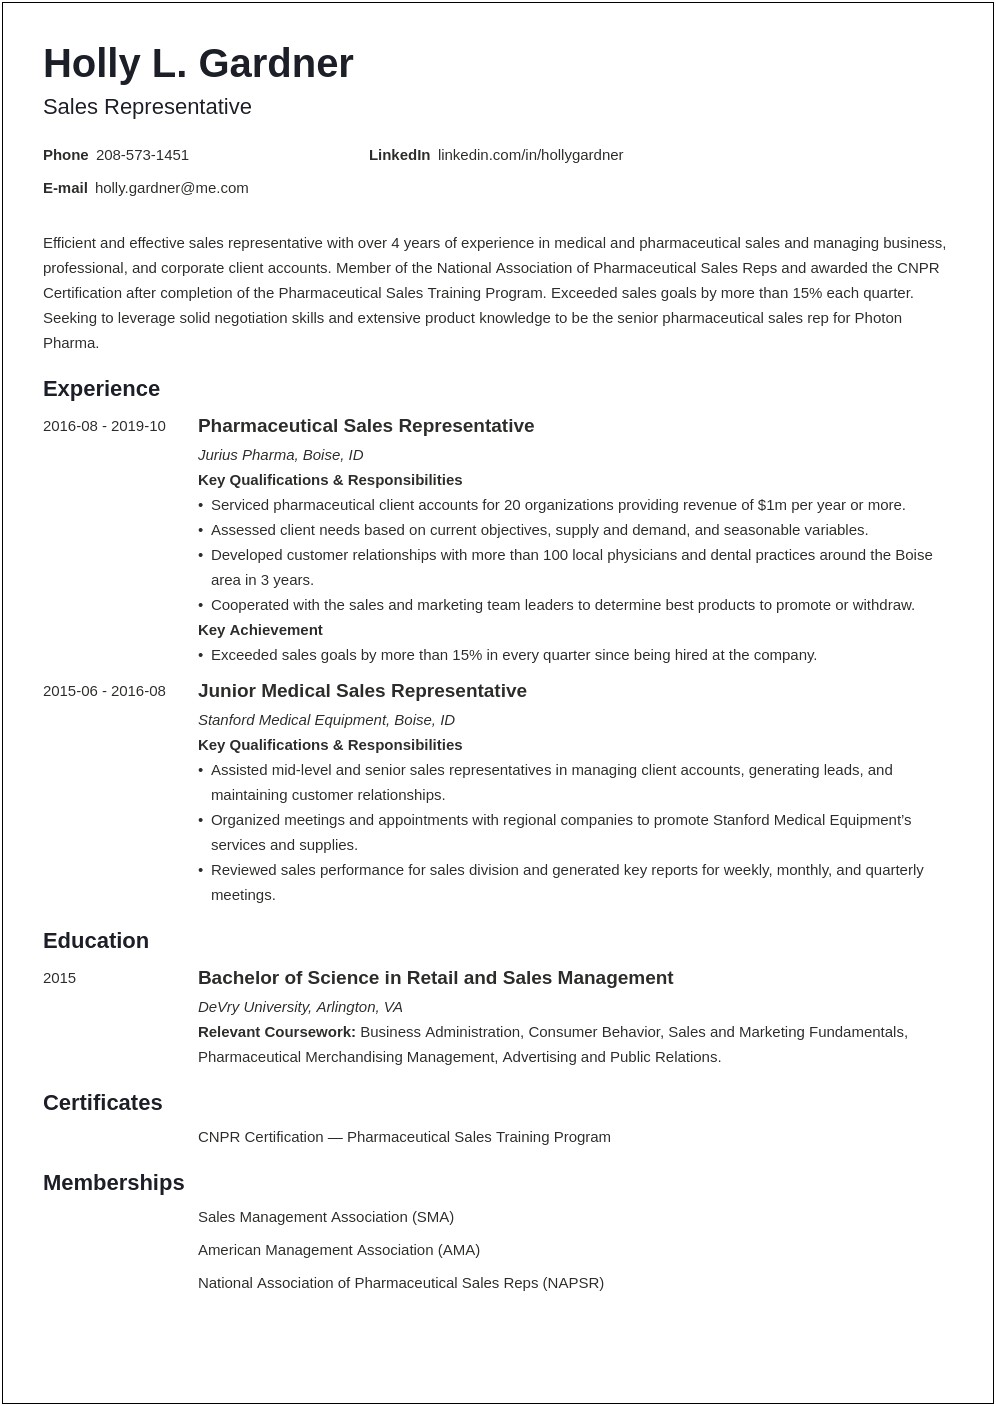 Senior Sales Executive Job Description For Resume